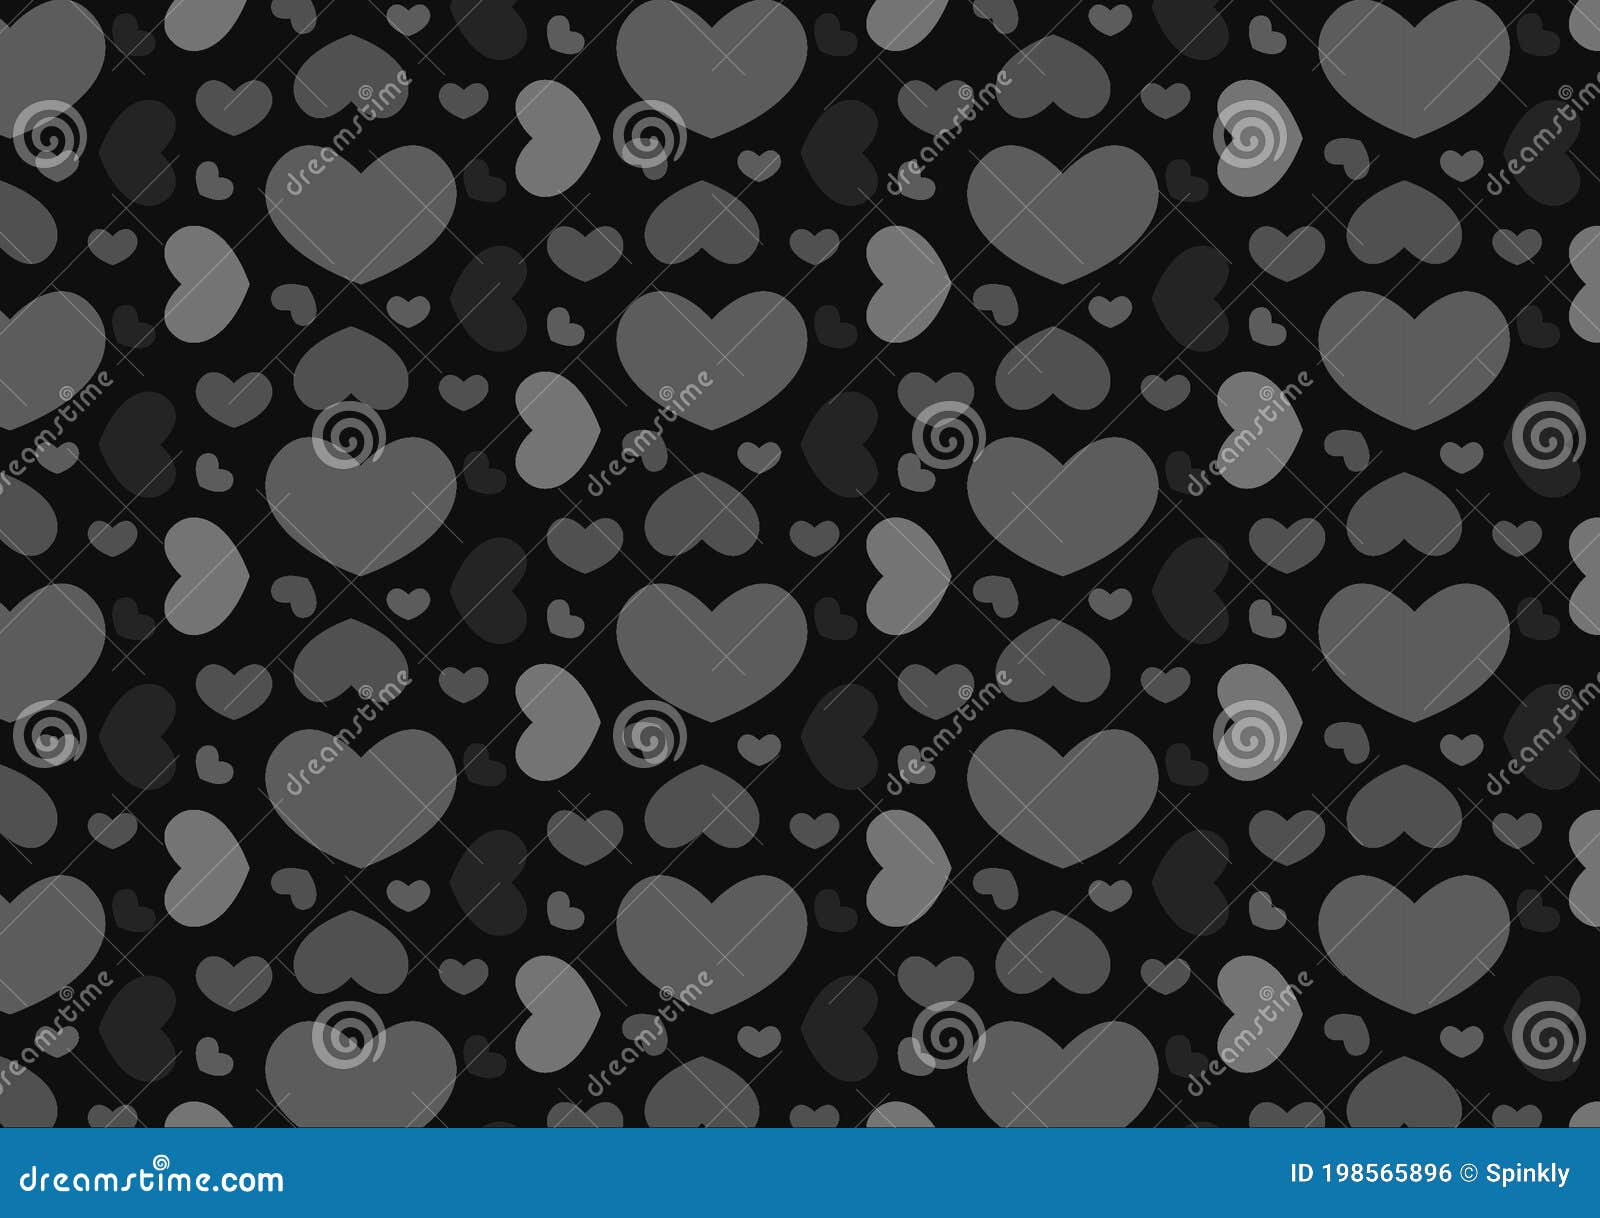 Light gray heart wallpaper 3